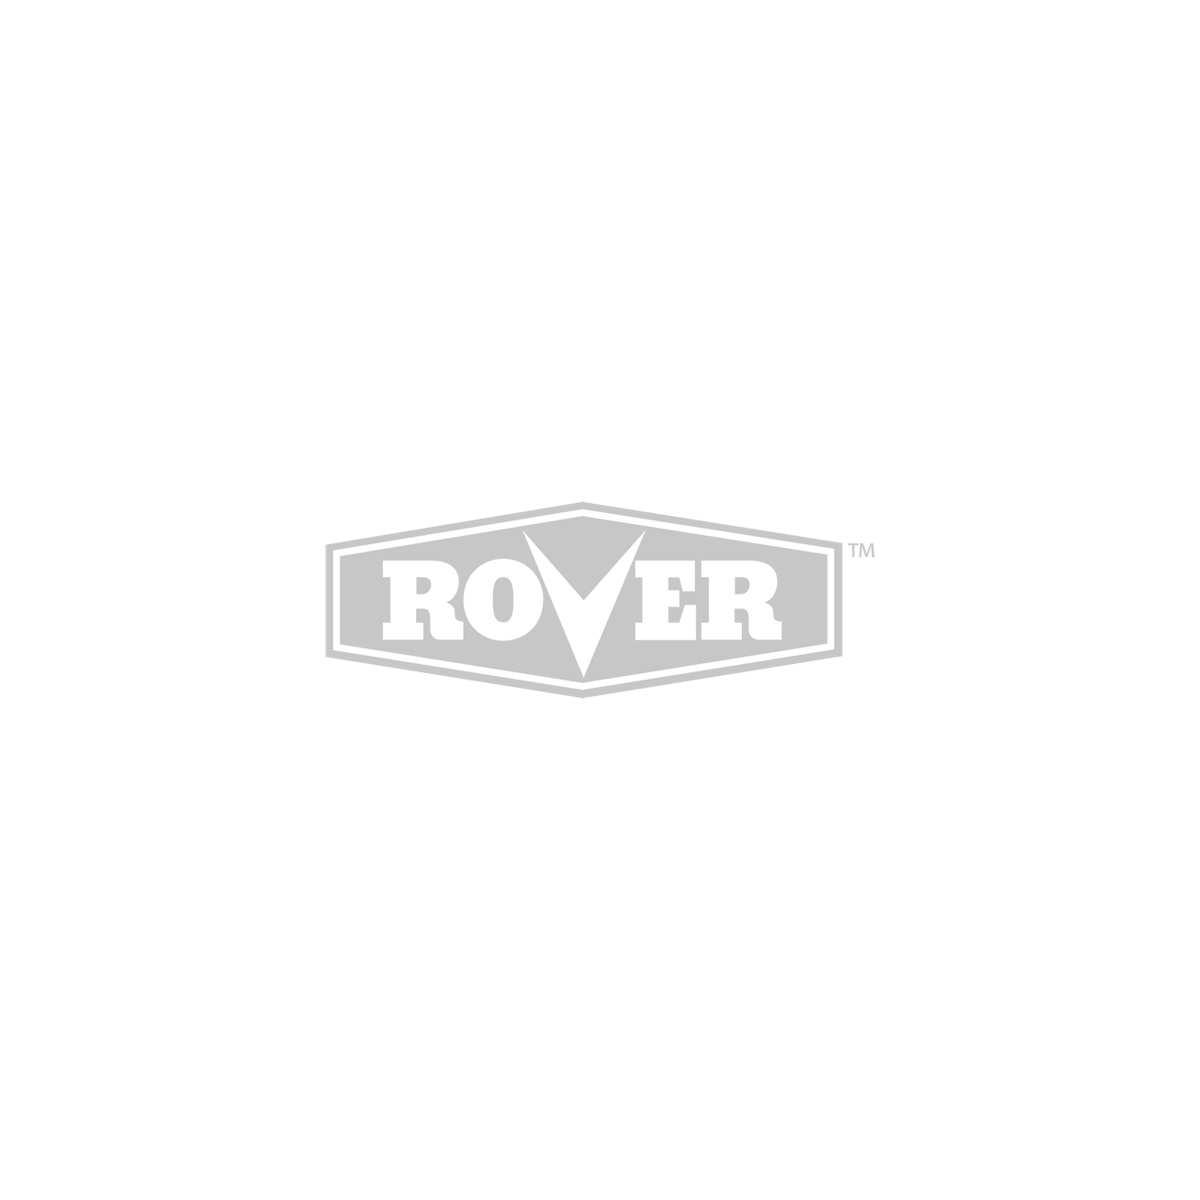 Rover Interest Free Finance